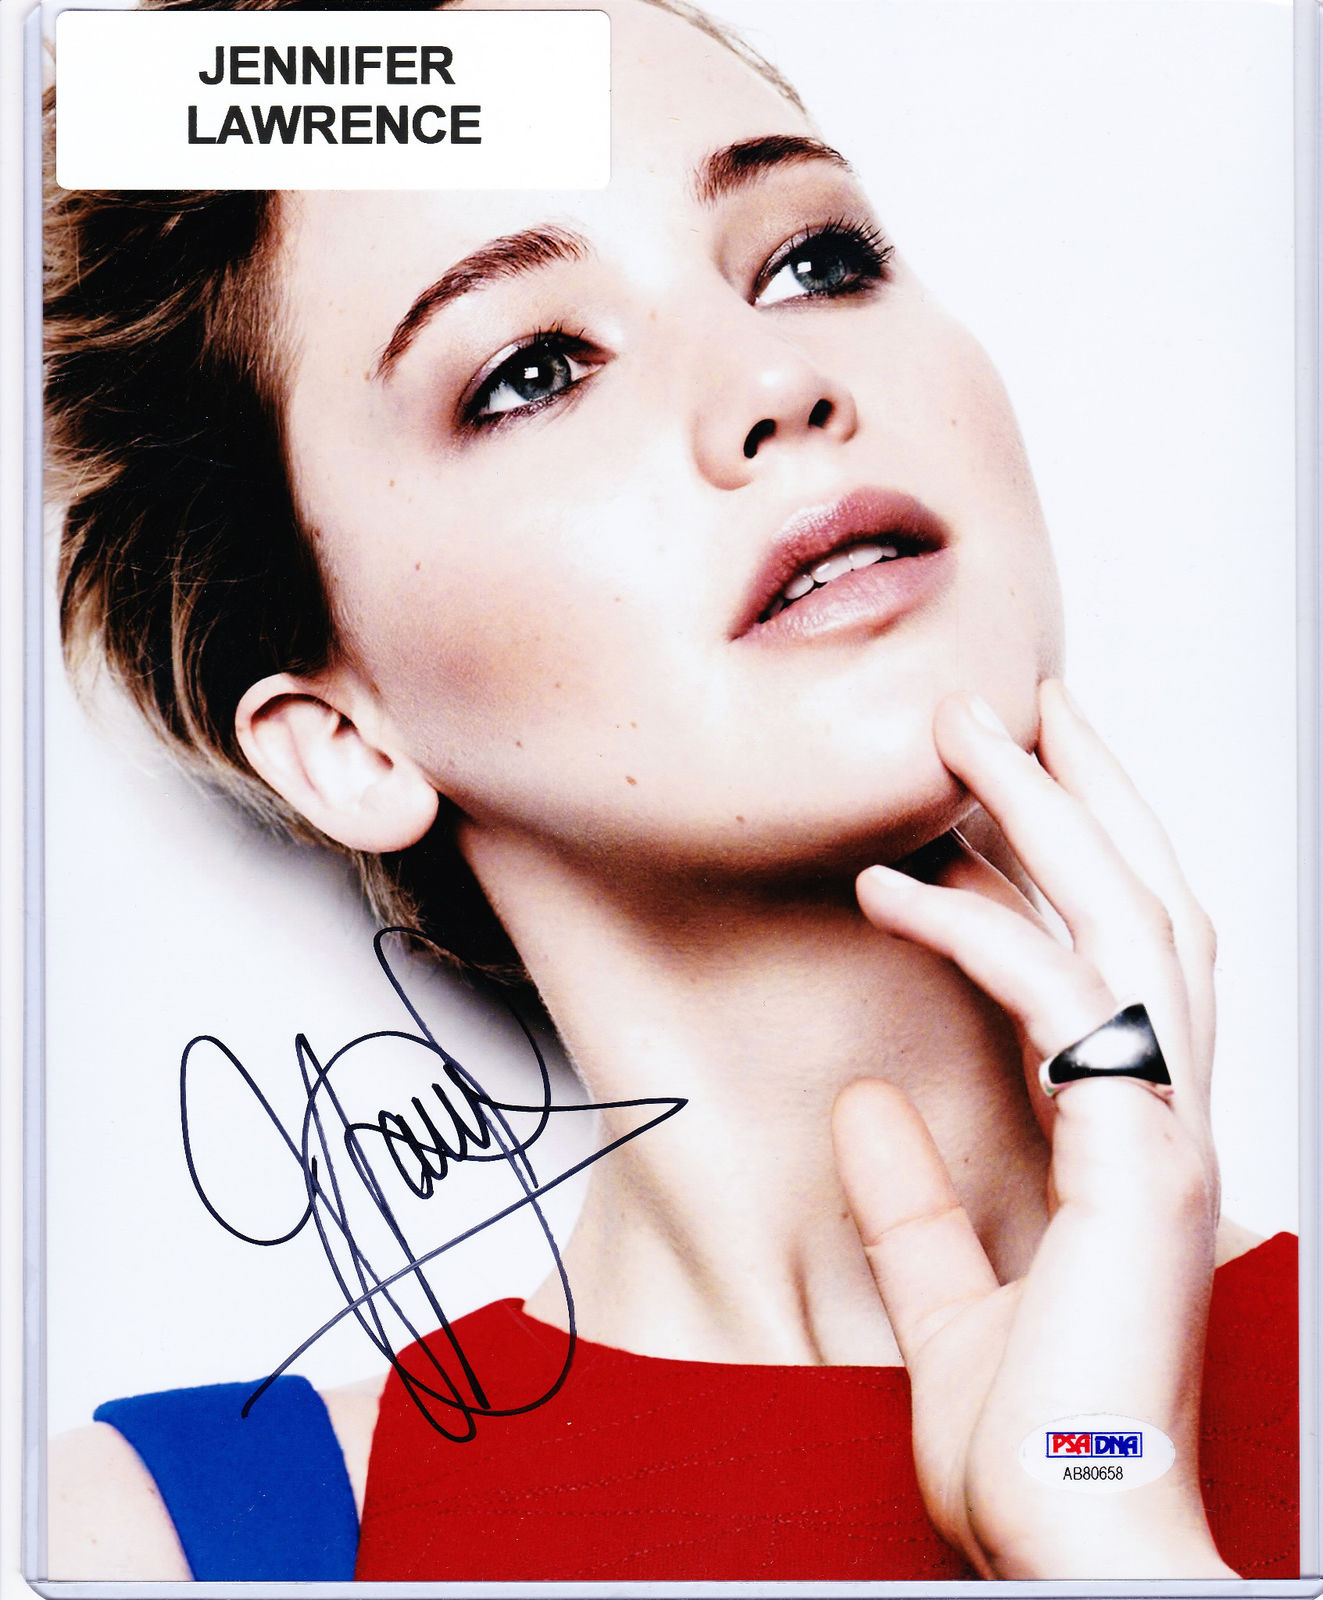 Jennifer Lawrence Autographed 8x10 Photo Auto Signed PSA/DNA Certified